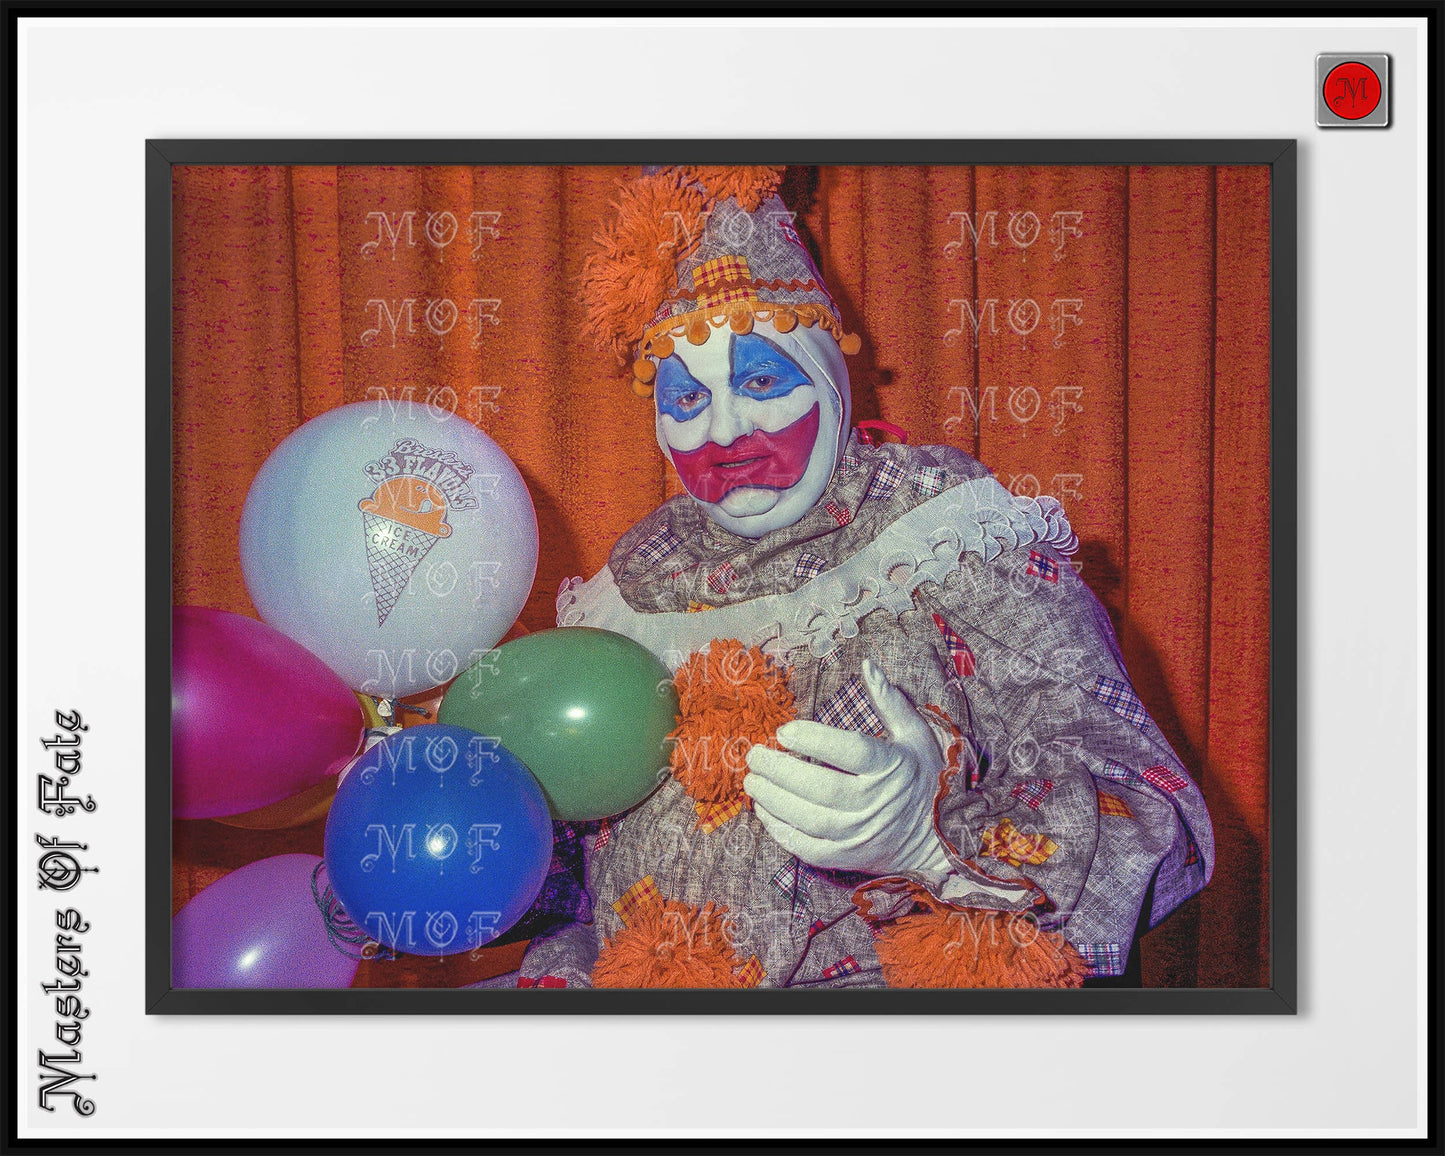 John Wayne Gacy Pogo the Clown Photo REMASTERED